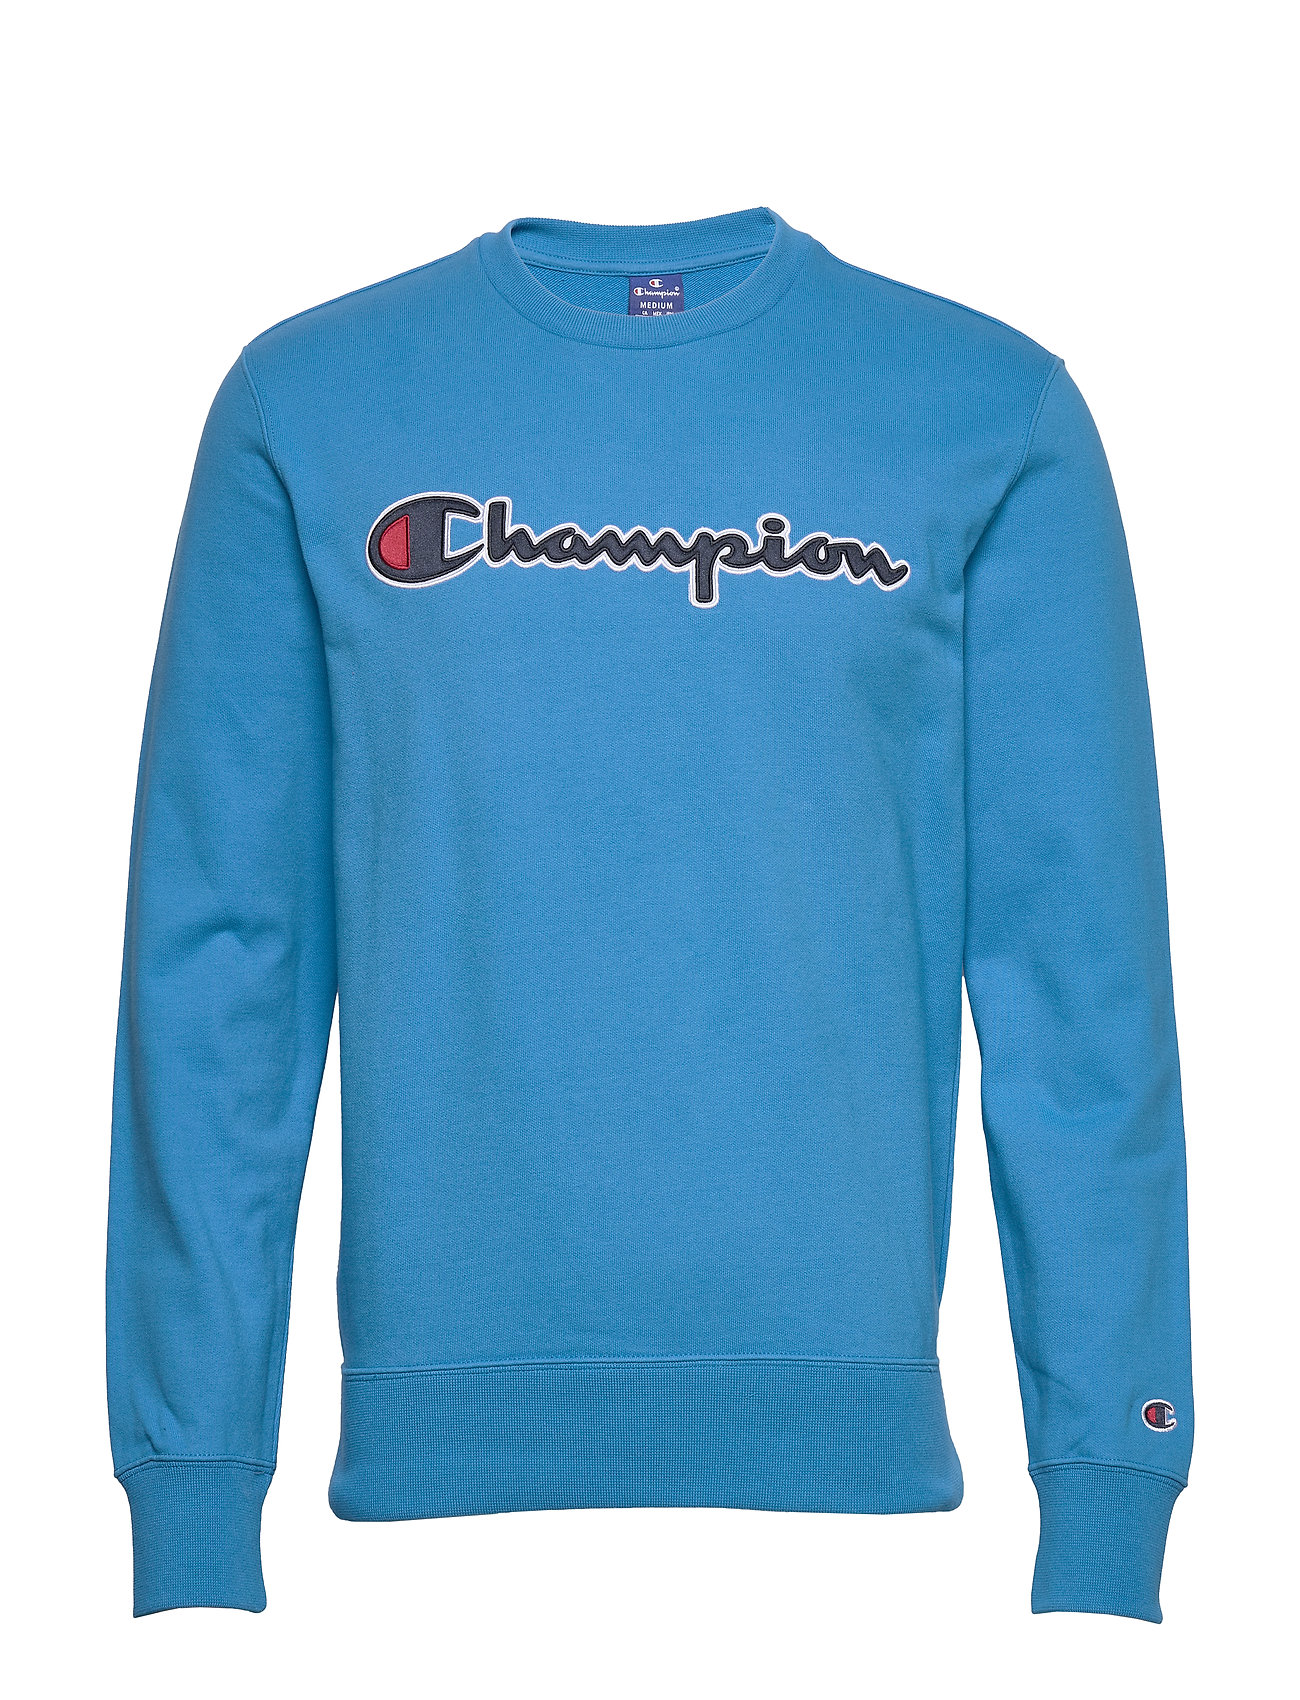 Crewneck Sweatshirt (Blue Aster 